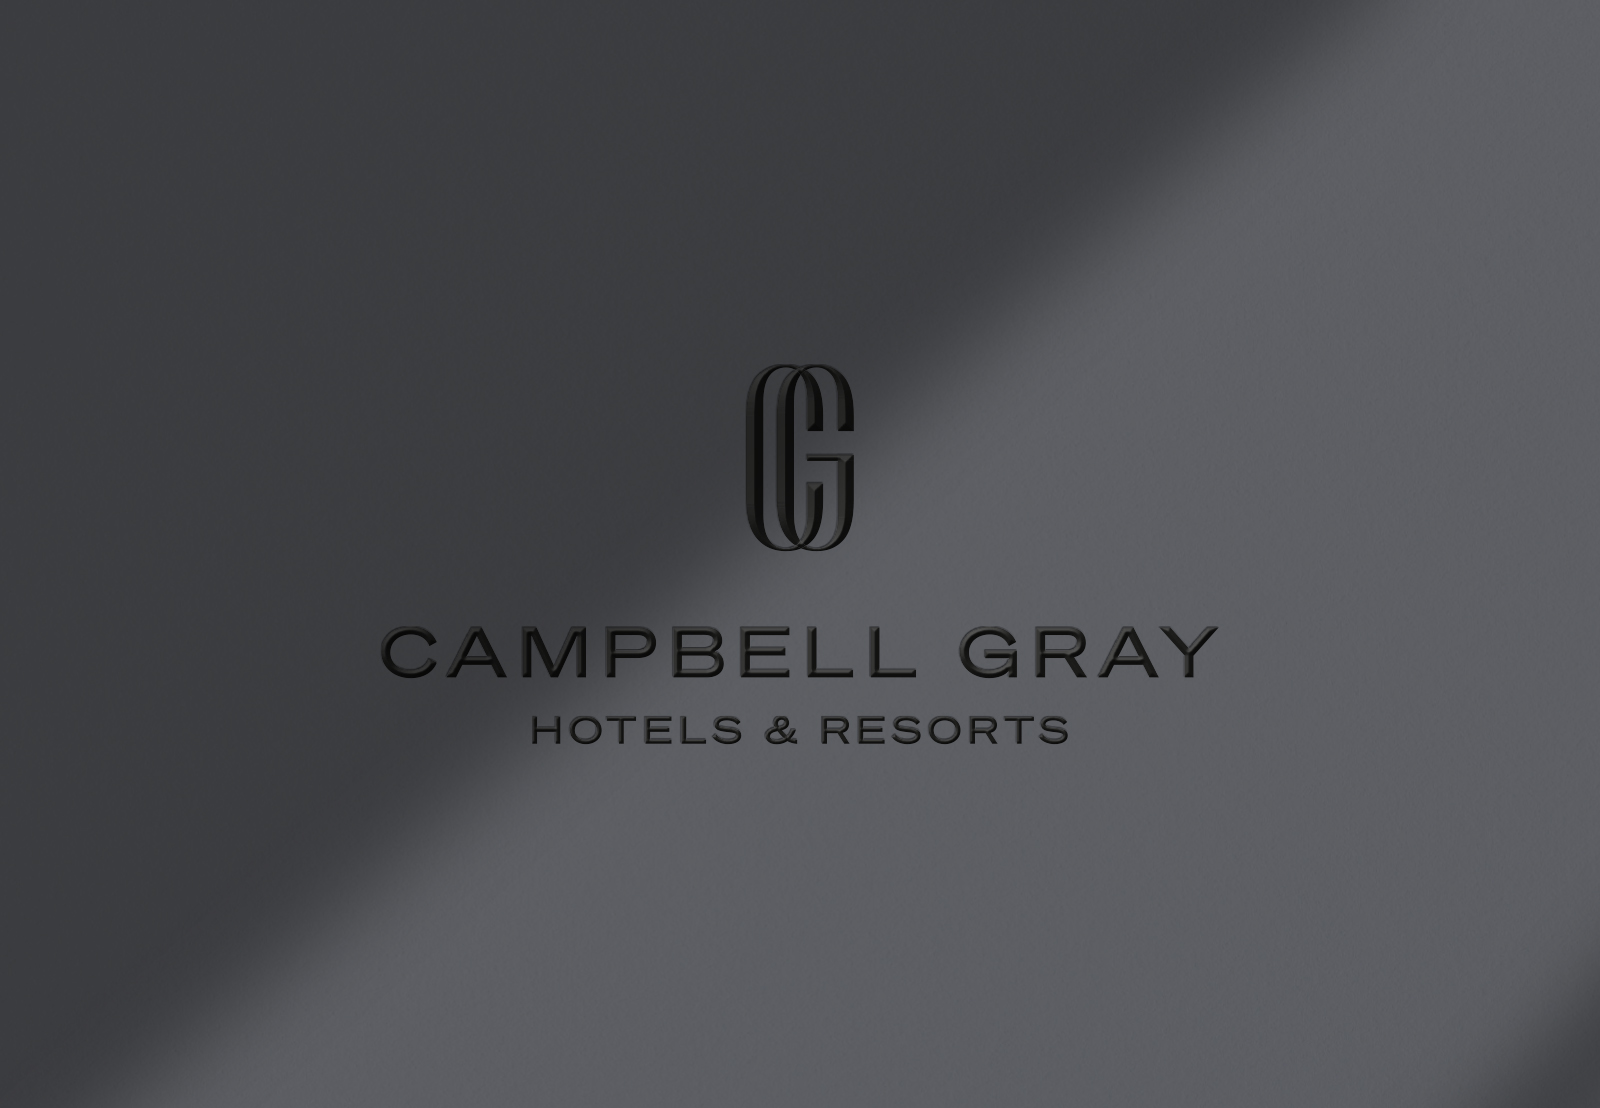 Campbell Gray Hotels & Resorts